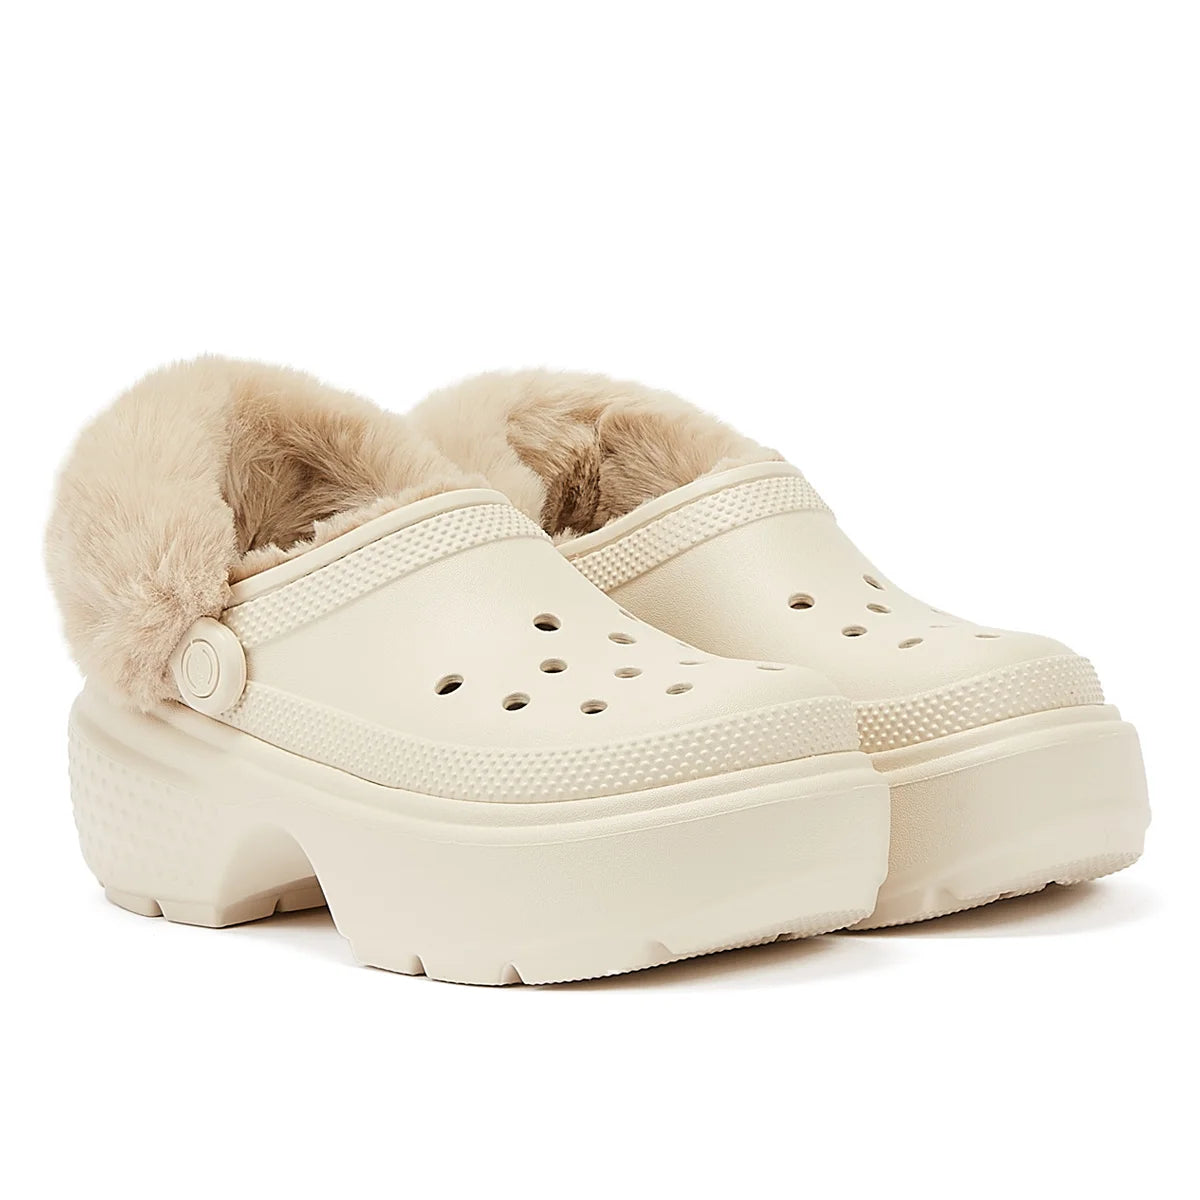 Crocs Stomp Lined Clog Women’s Beige Sandals